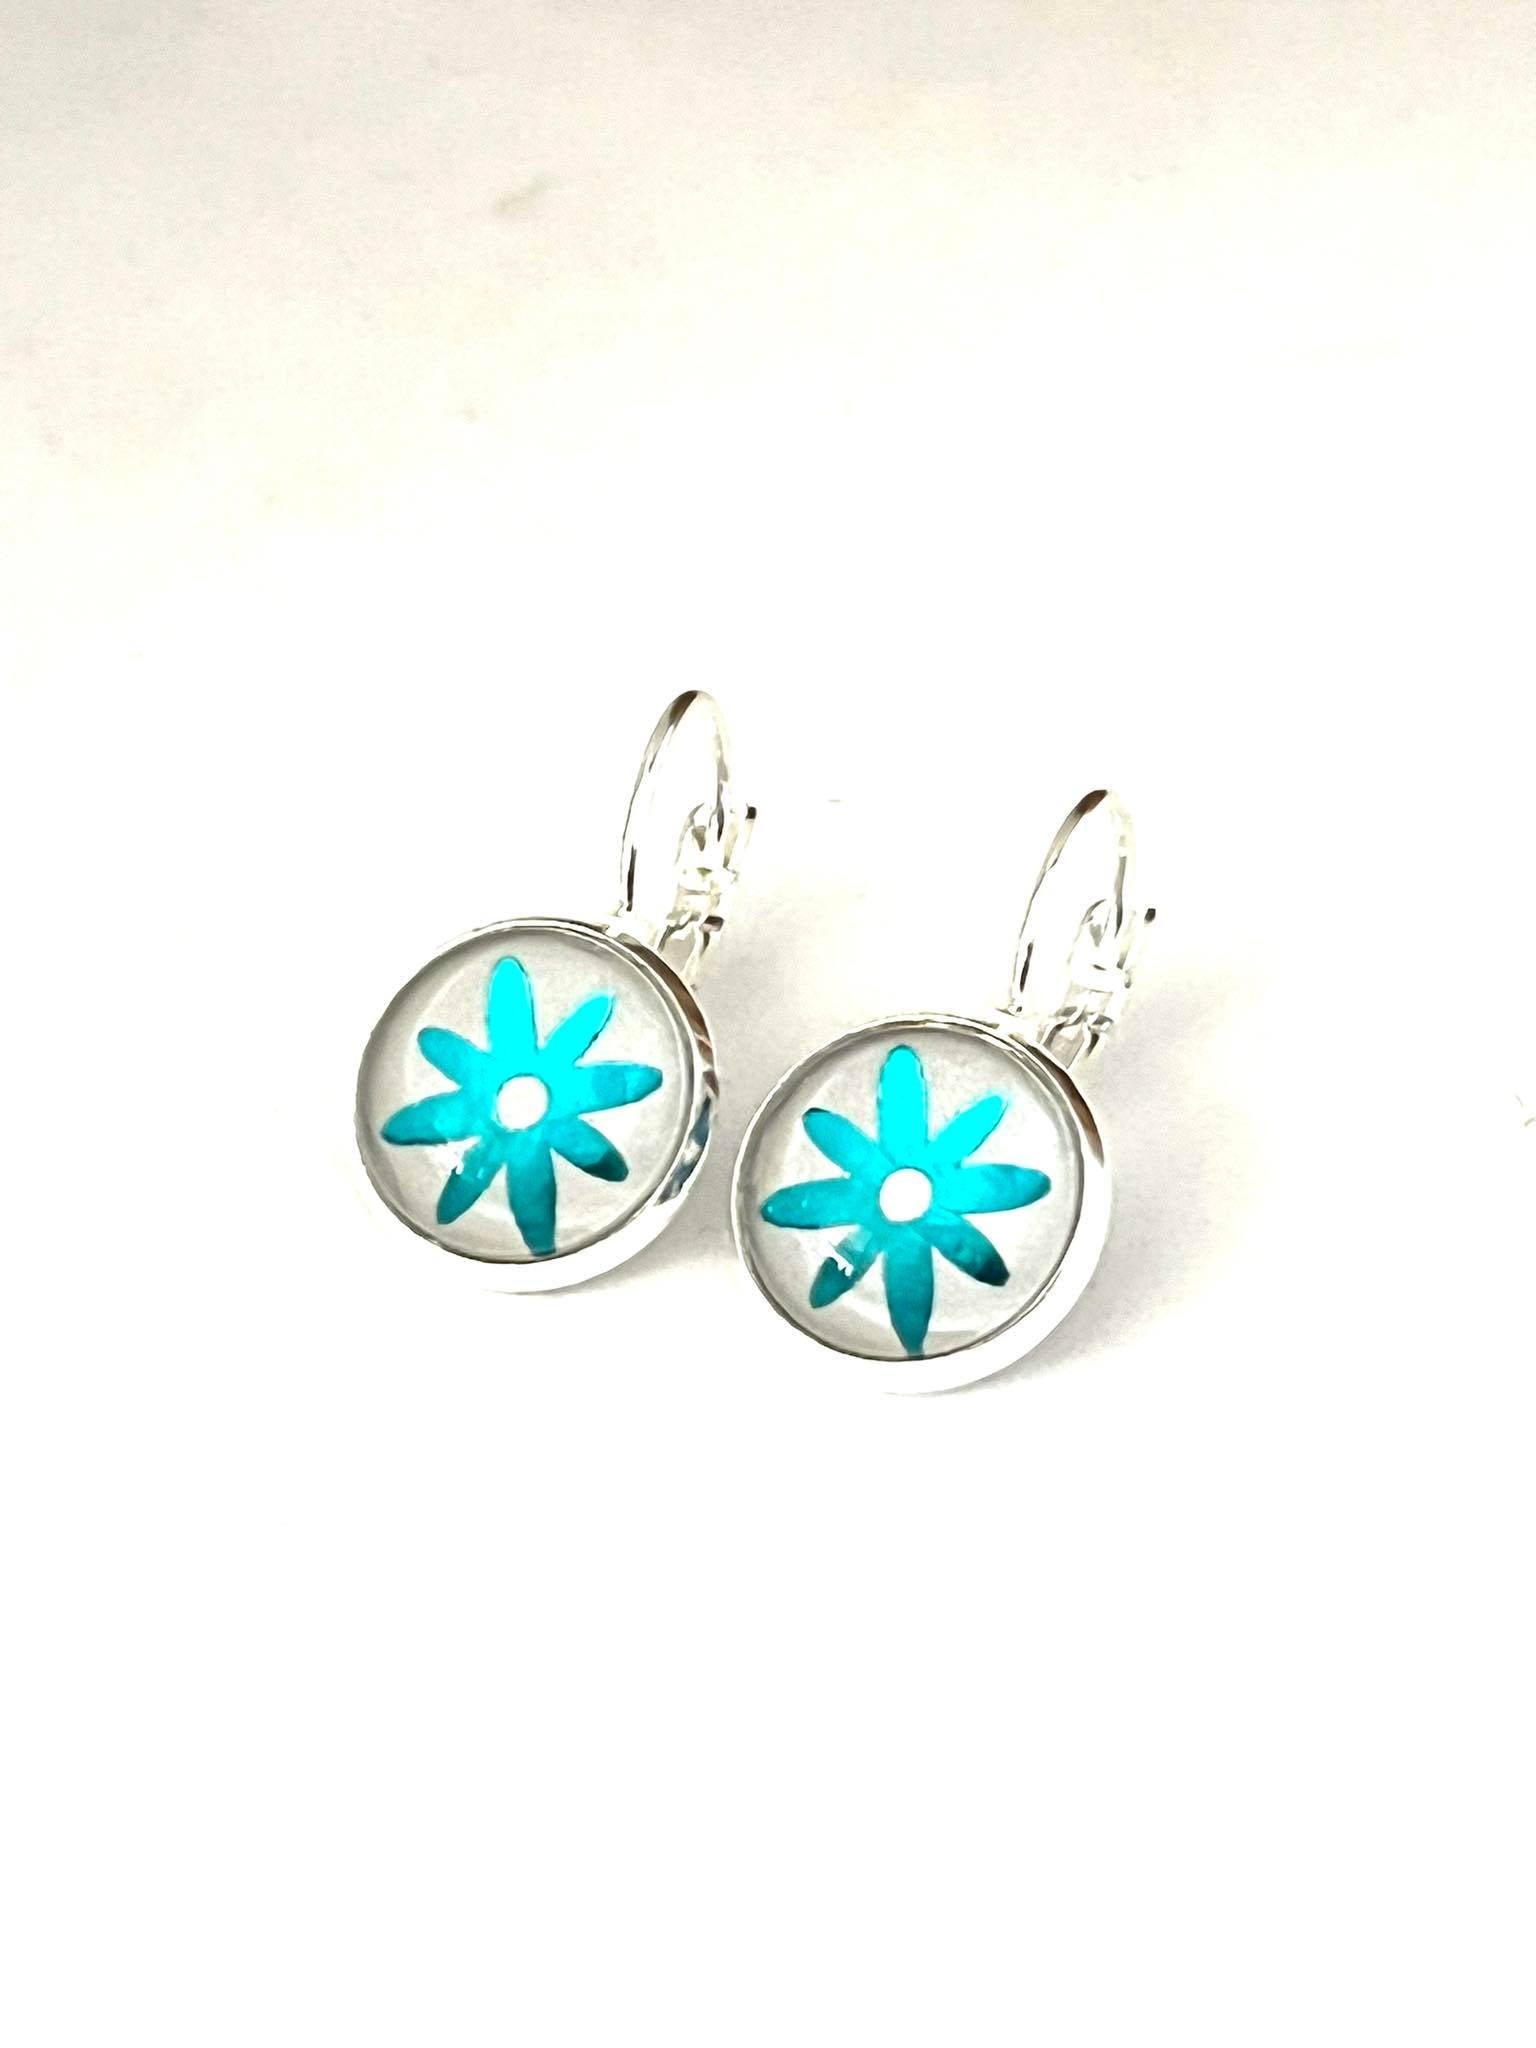 Metallic Aqua blue daisy glass dome earrings in a silver setting